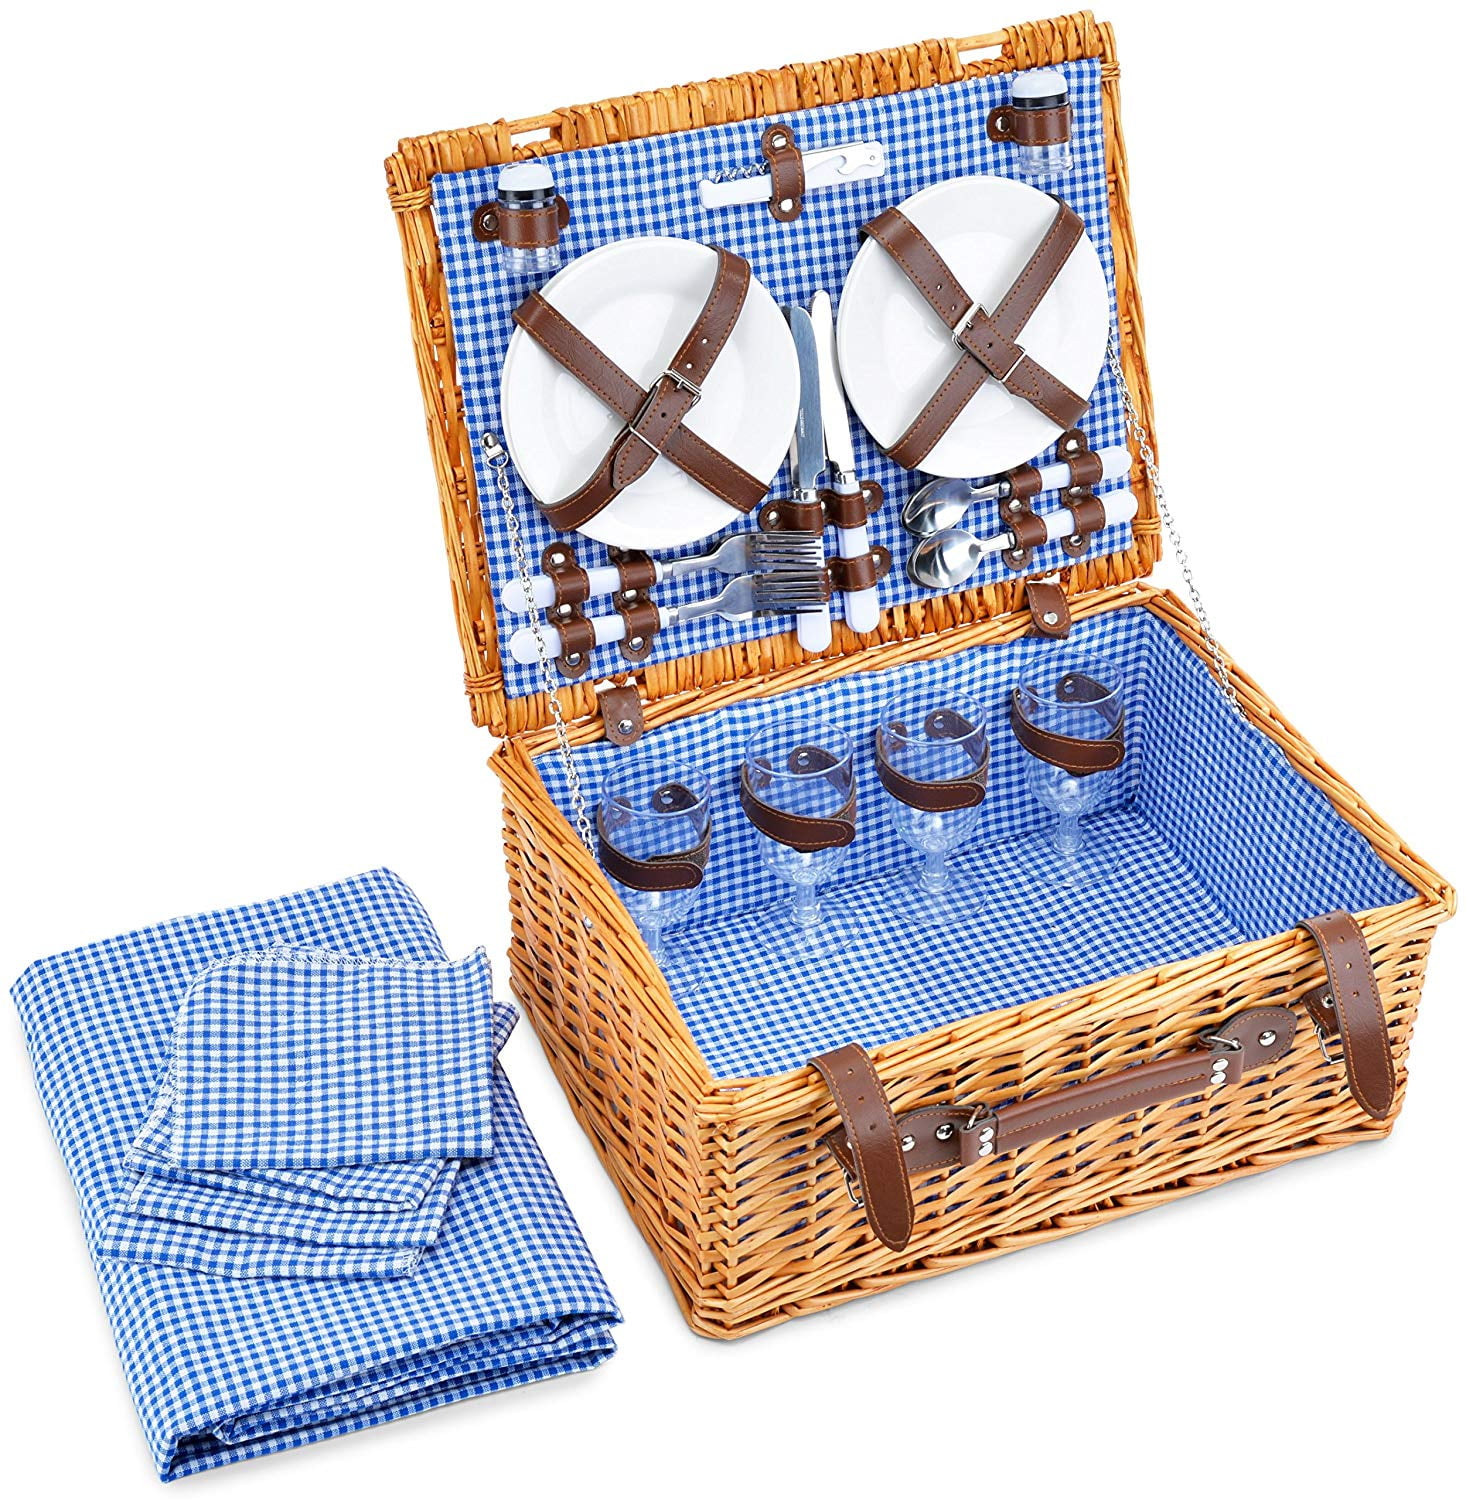 Buy Picnic Basket For 4 Person Picnic Hamper Set Folding Picnic